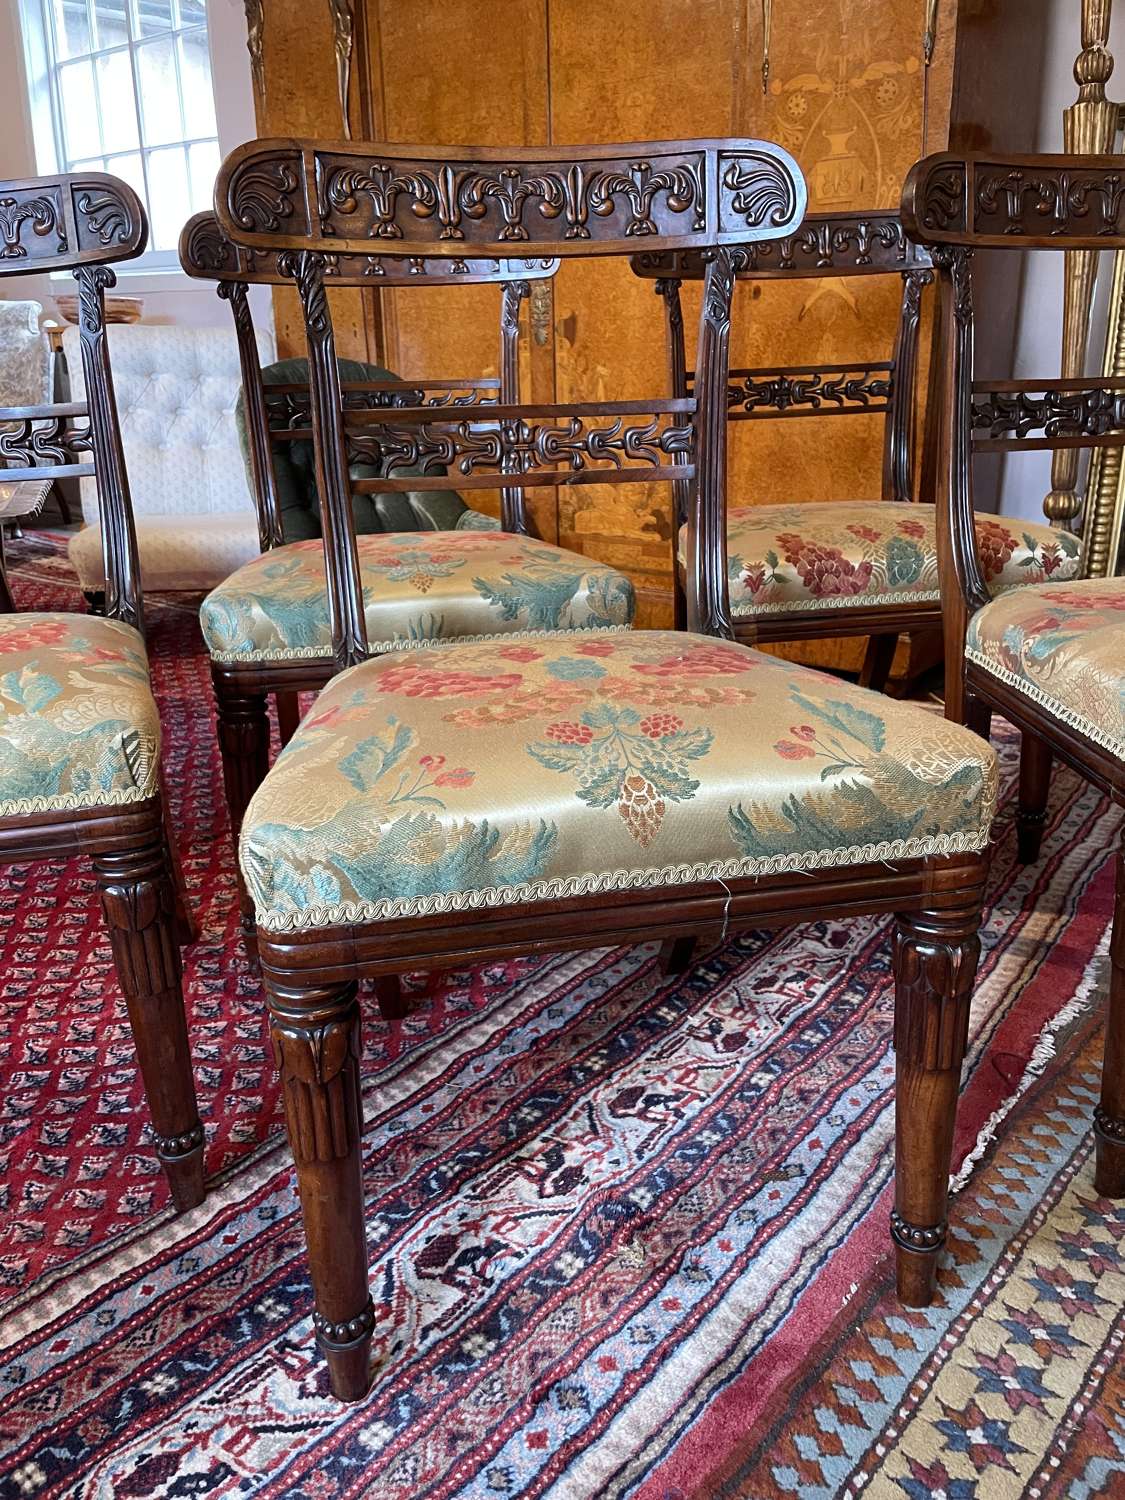 Set of Six William IV Mahogany Dining Chairs